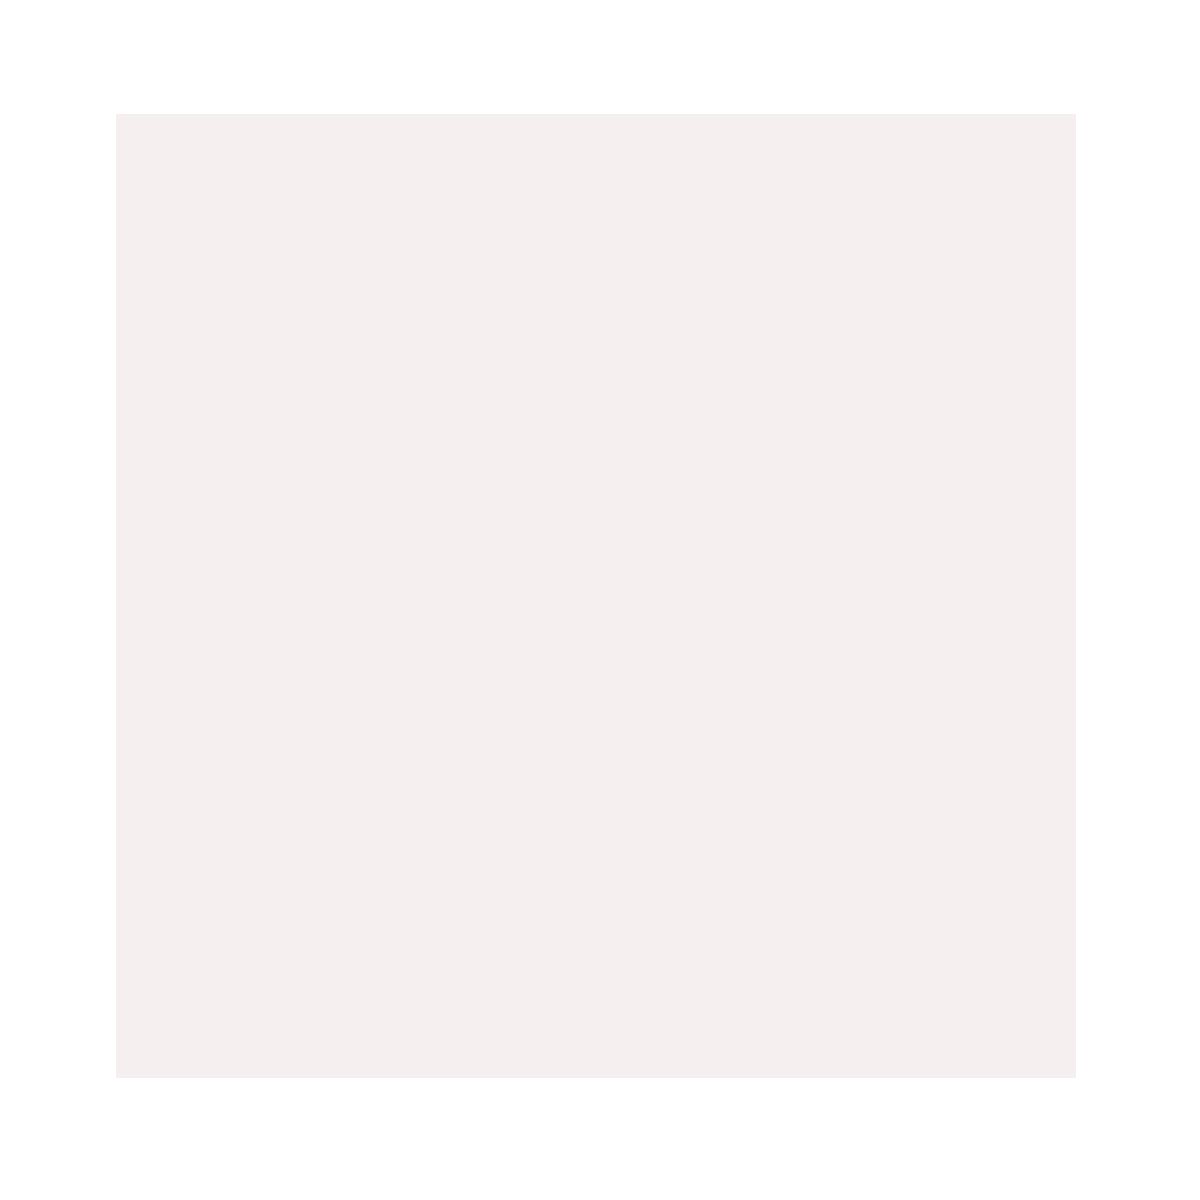 Clairefontaine Pastelmat - White 50 cm x 70 cm, 360 gsm